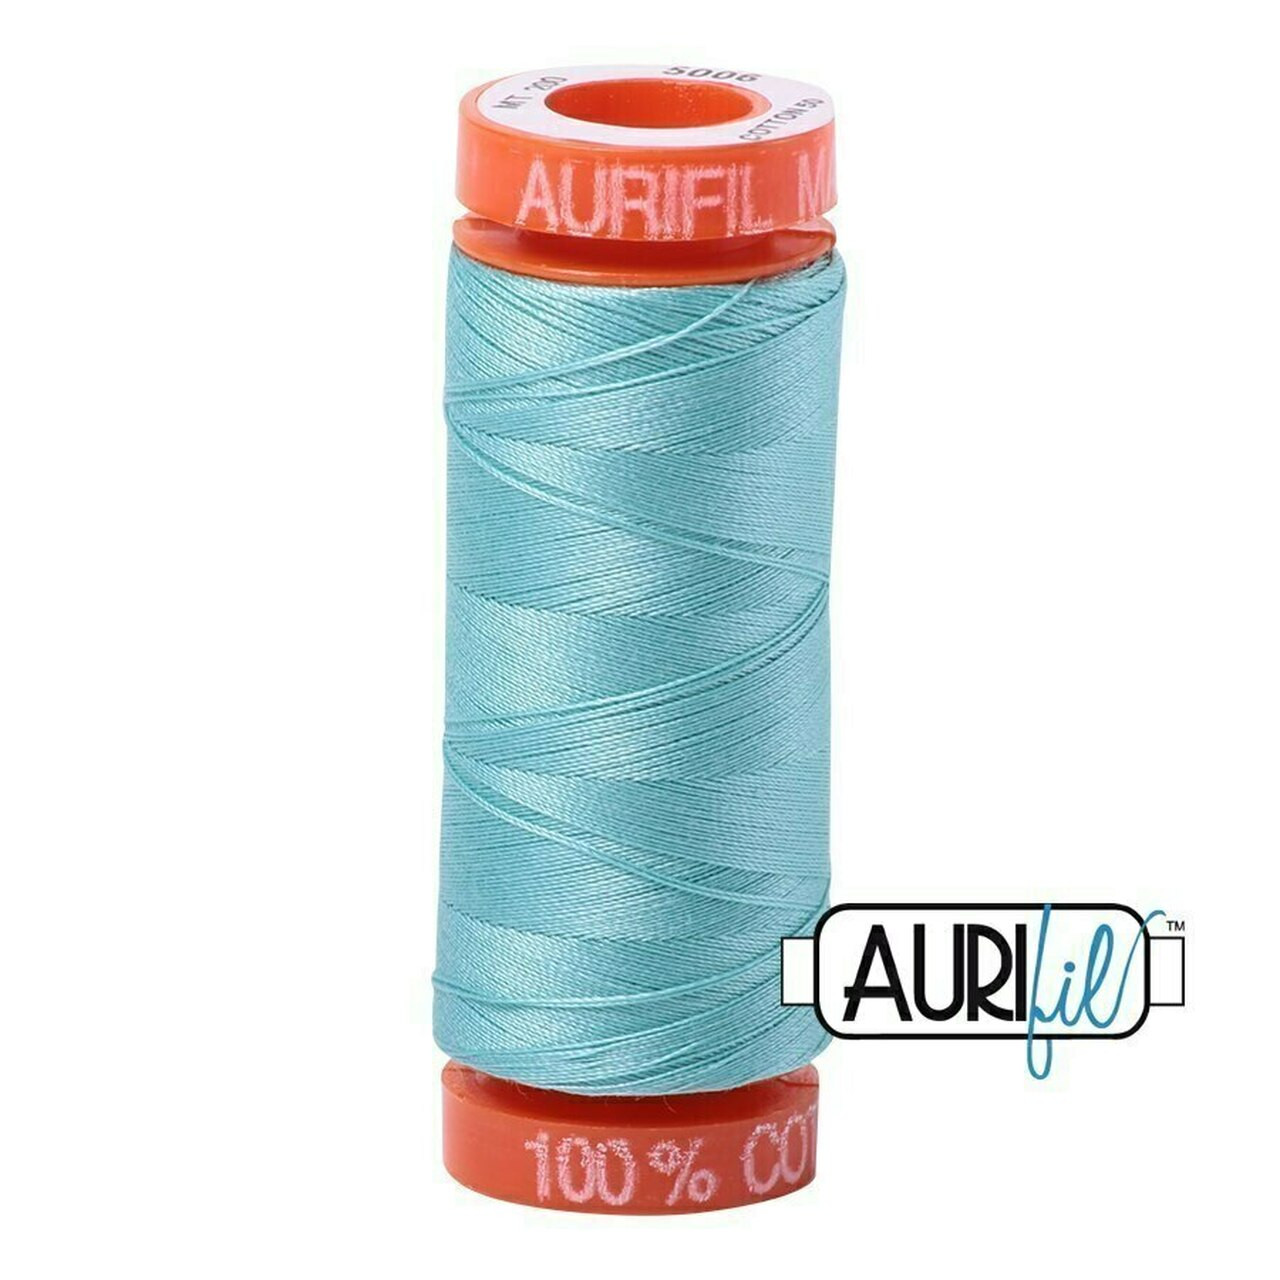 Aurifil 5006 - Light Turquoise